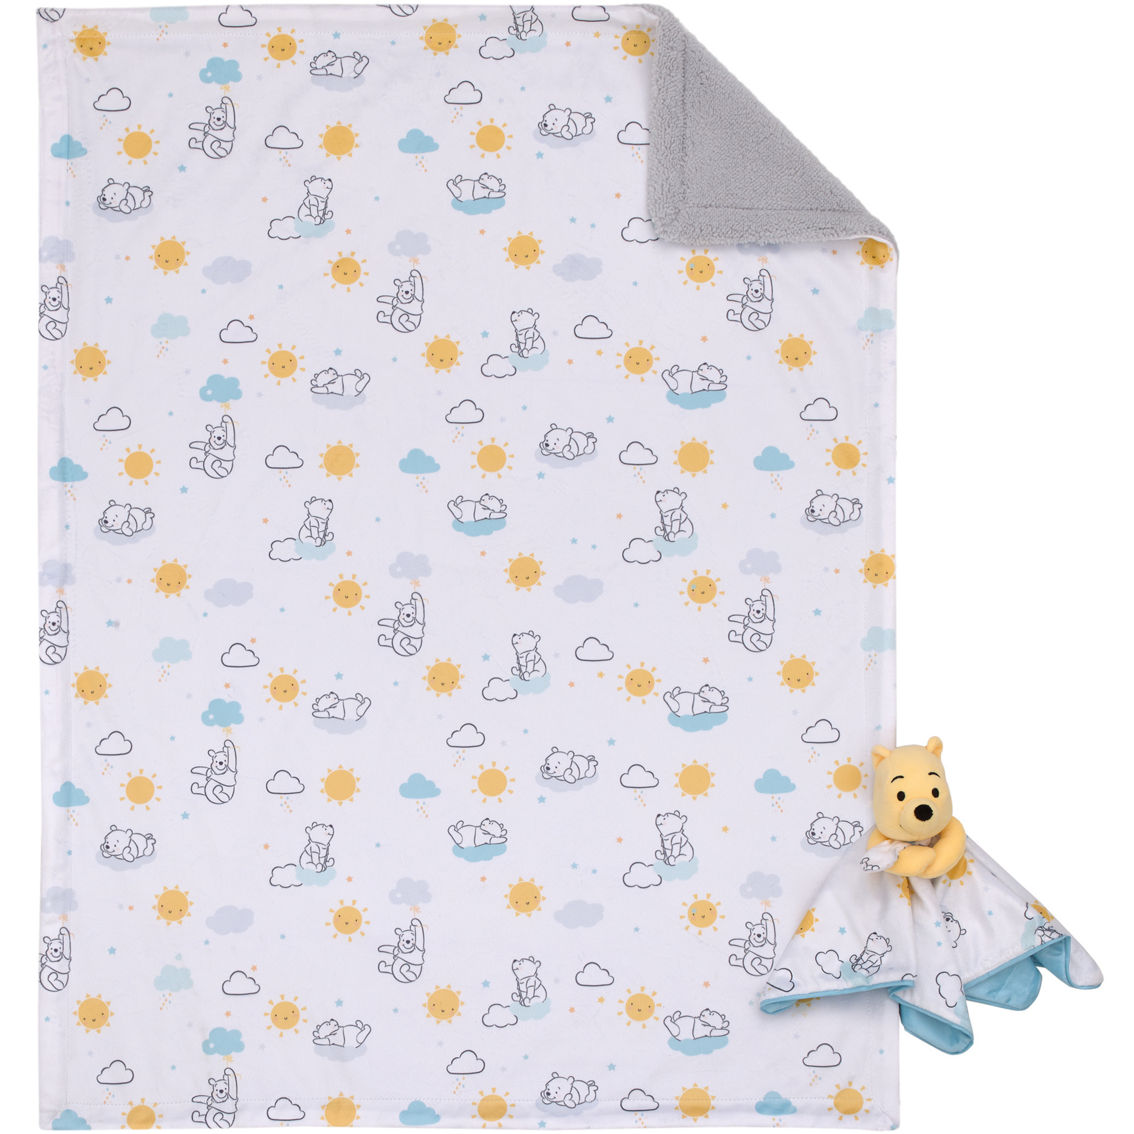 Disney Winnie the Pooh Baby Blanket and Security Blanket 2 pc. Set - Image 2 of 7